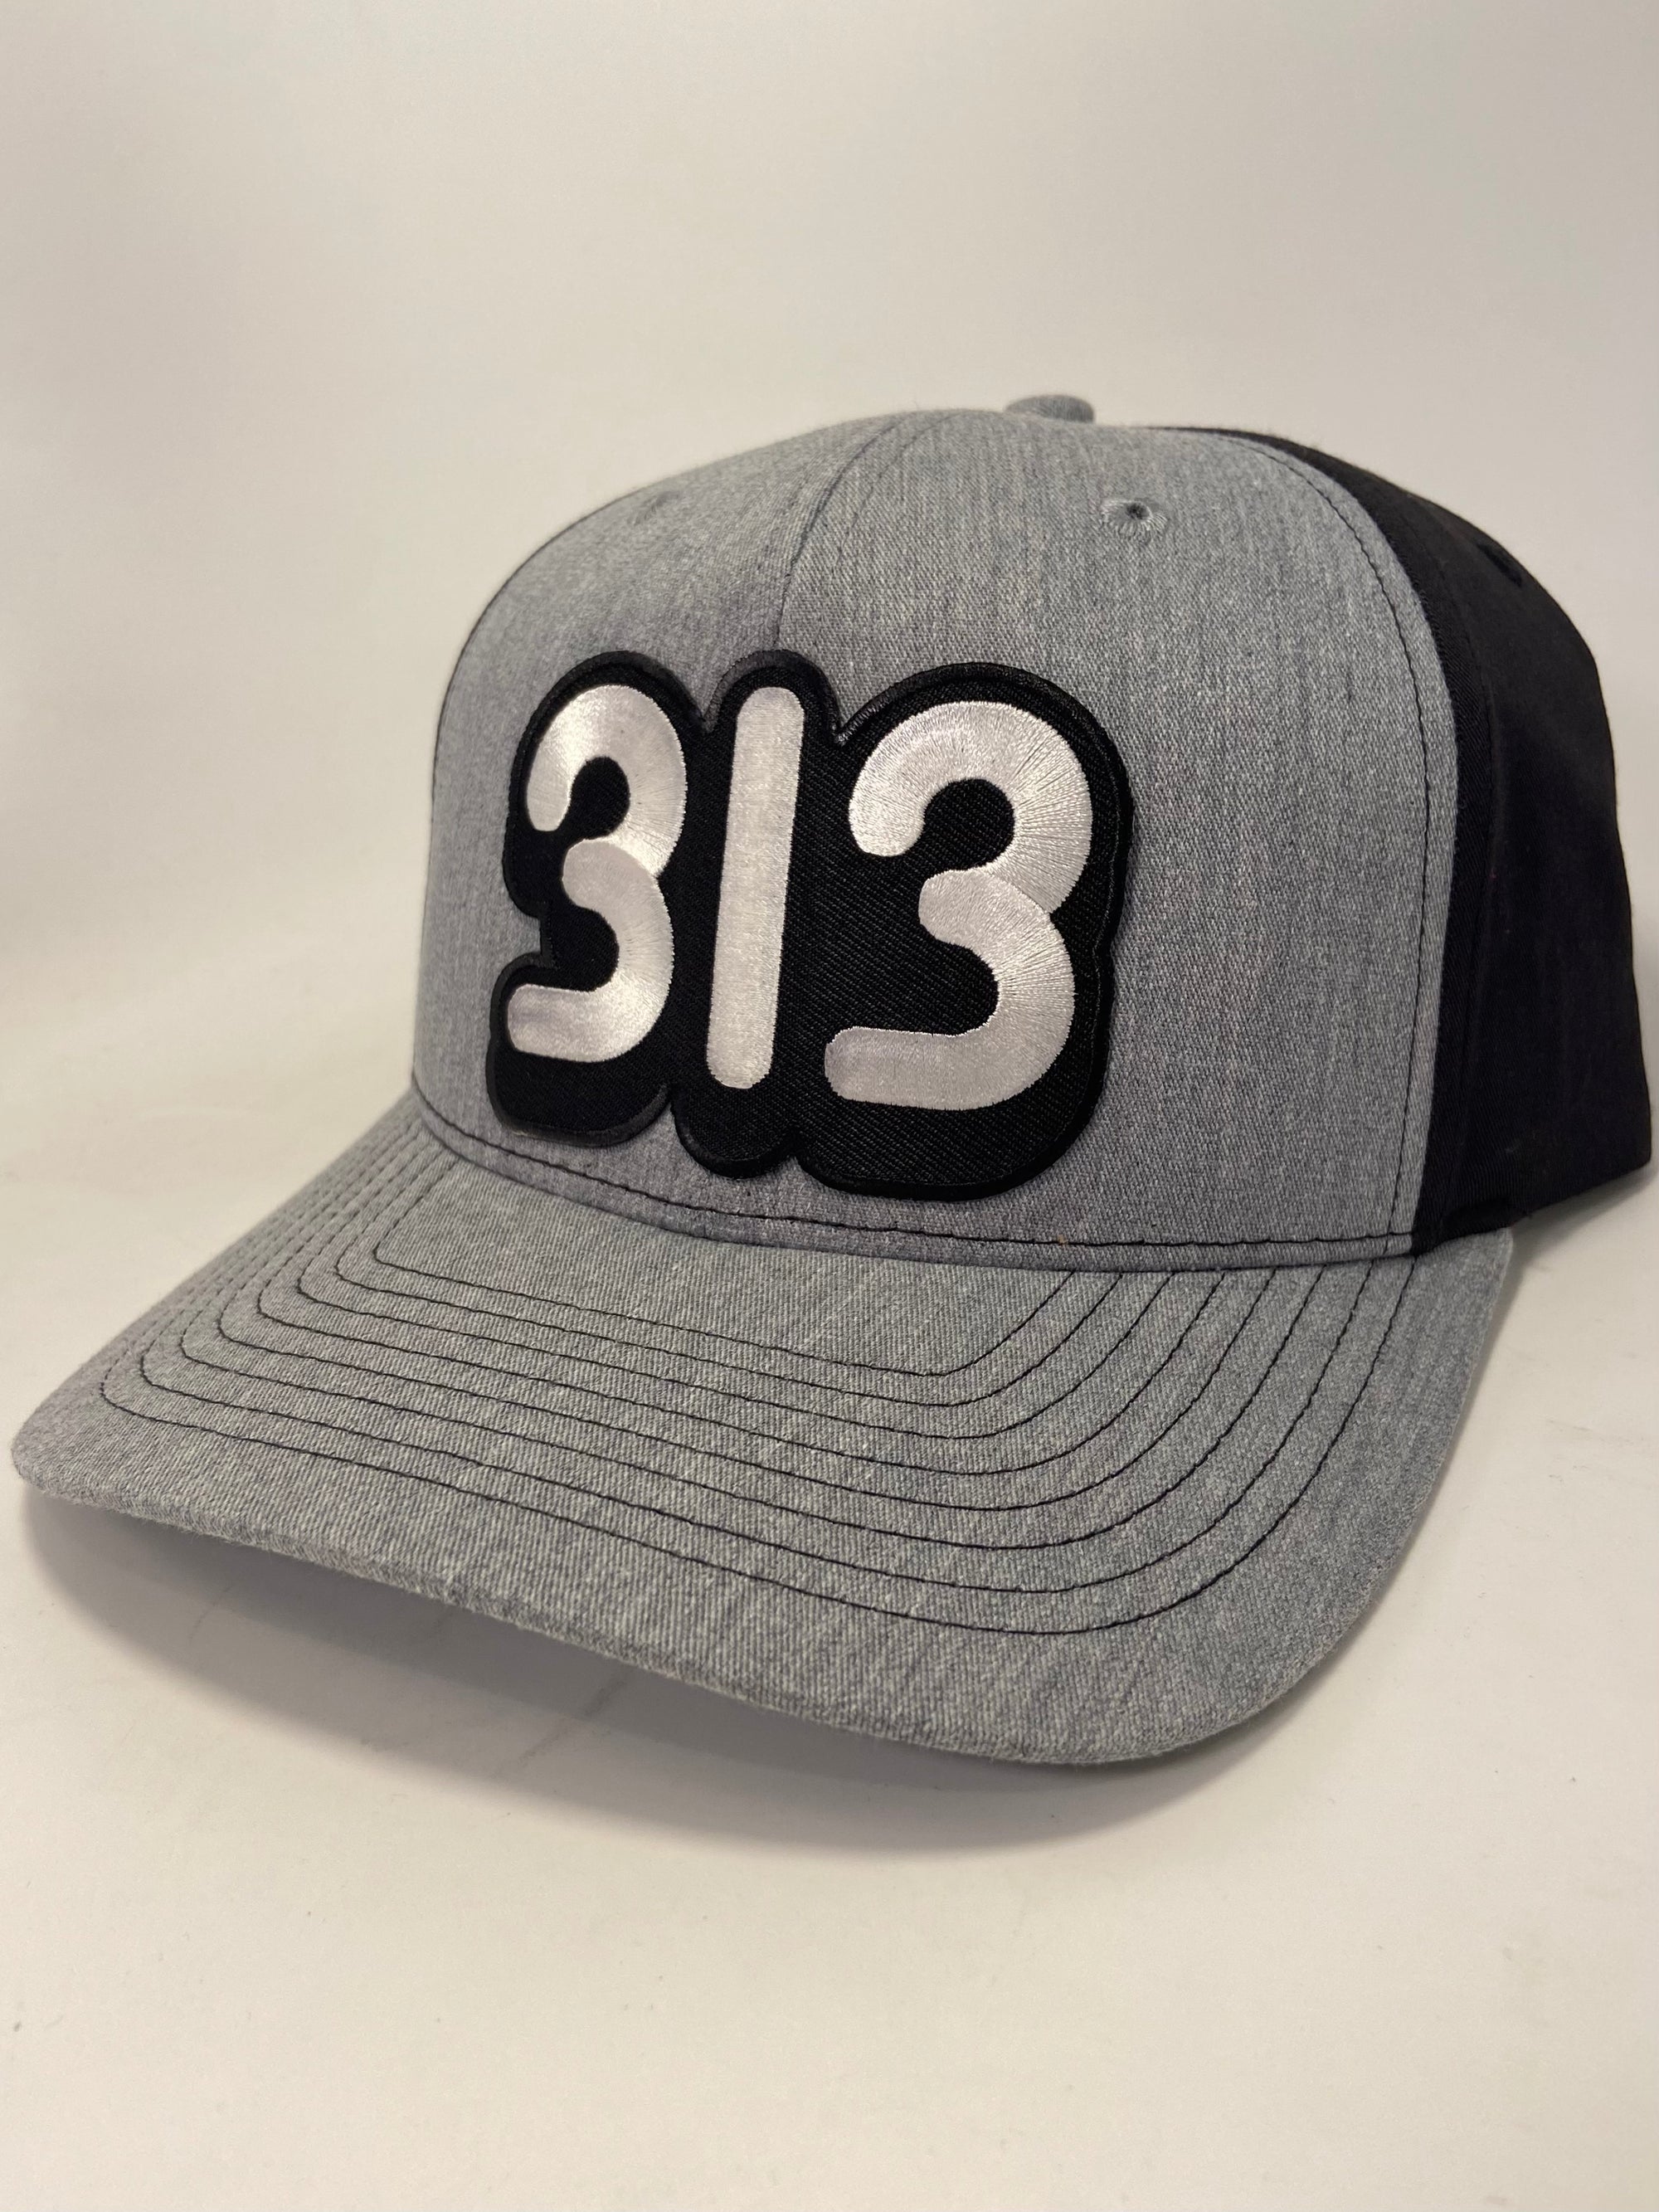 313 Snapback Hat / Black + Gray Hat   